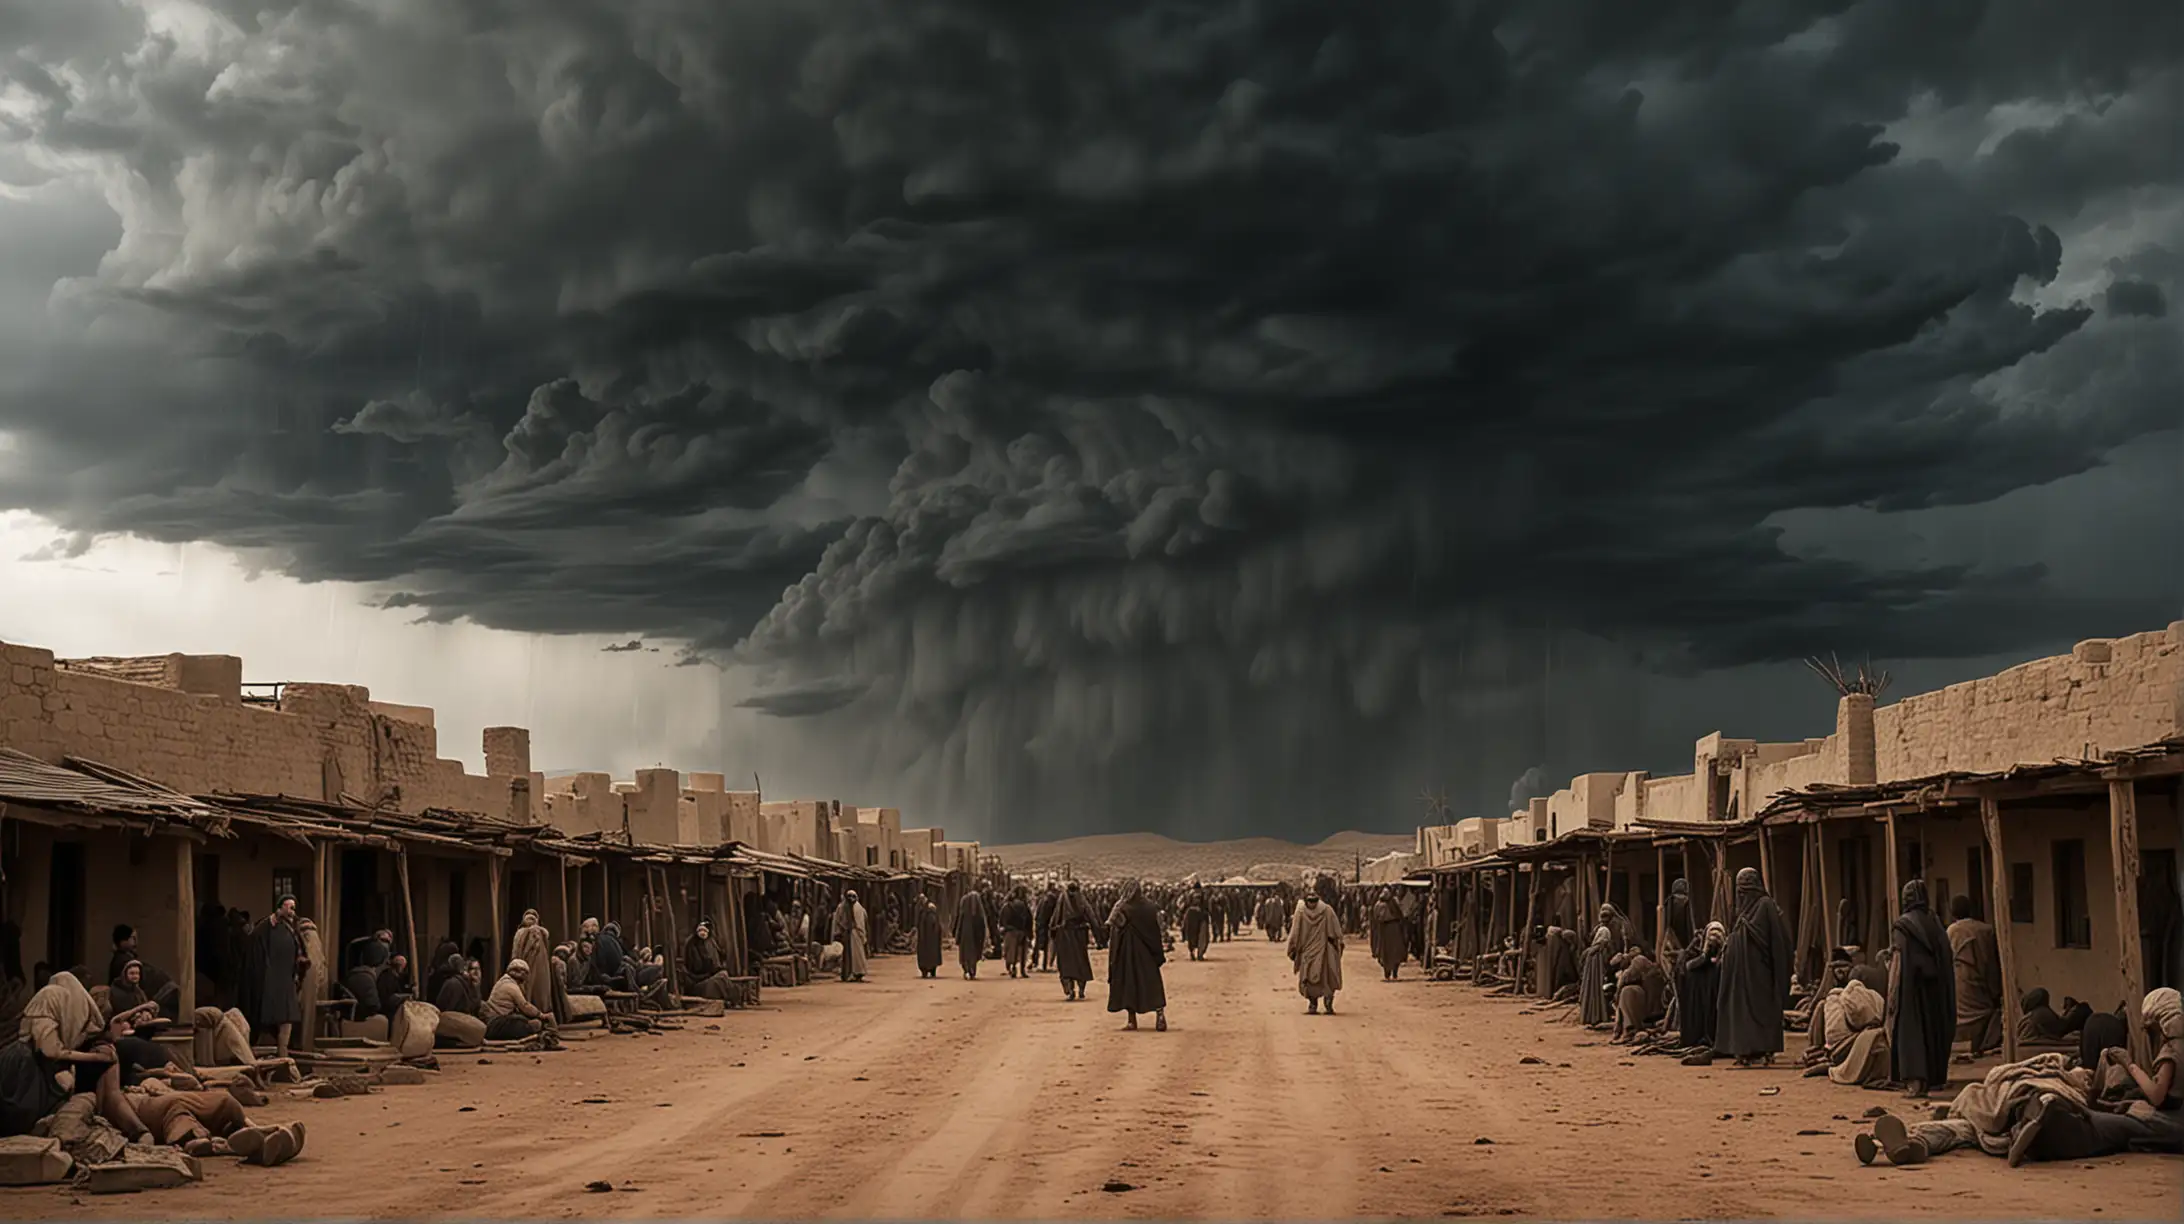 Fearful Crowd in Biblical Era Desert Town Under Dark Stormy Cloud